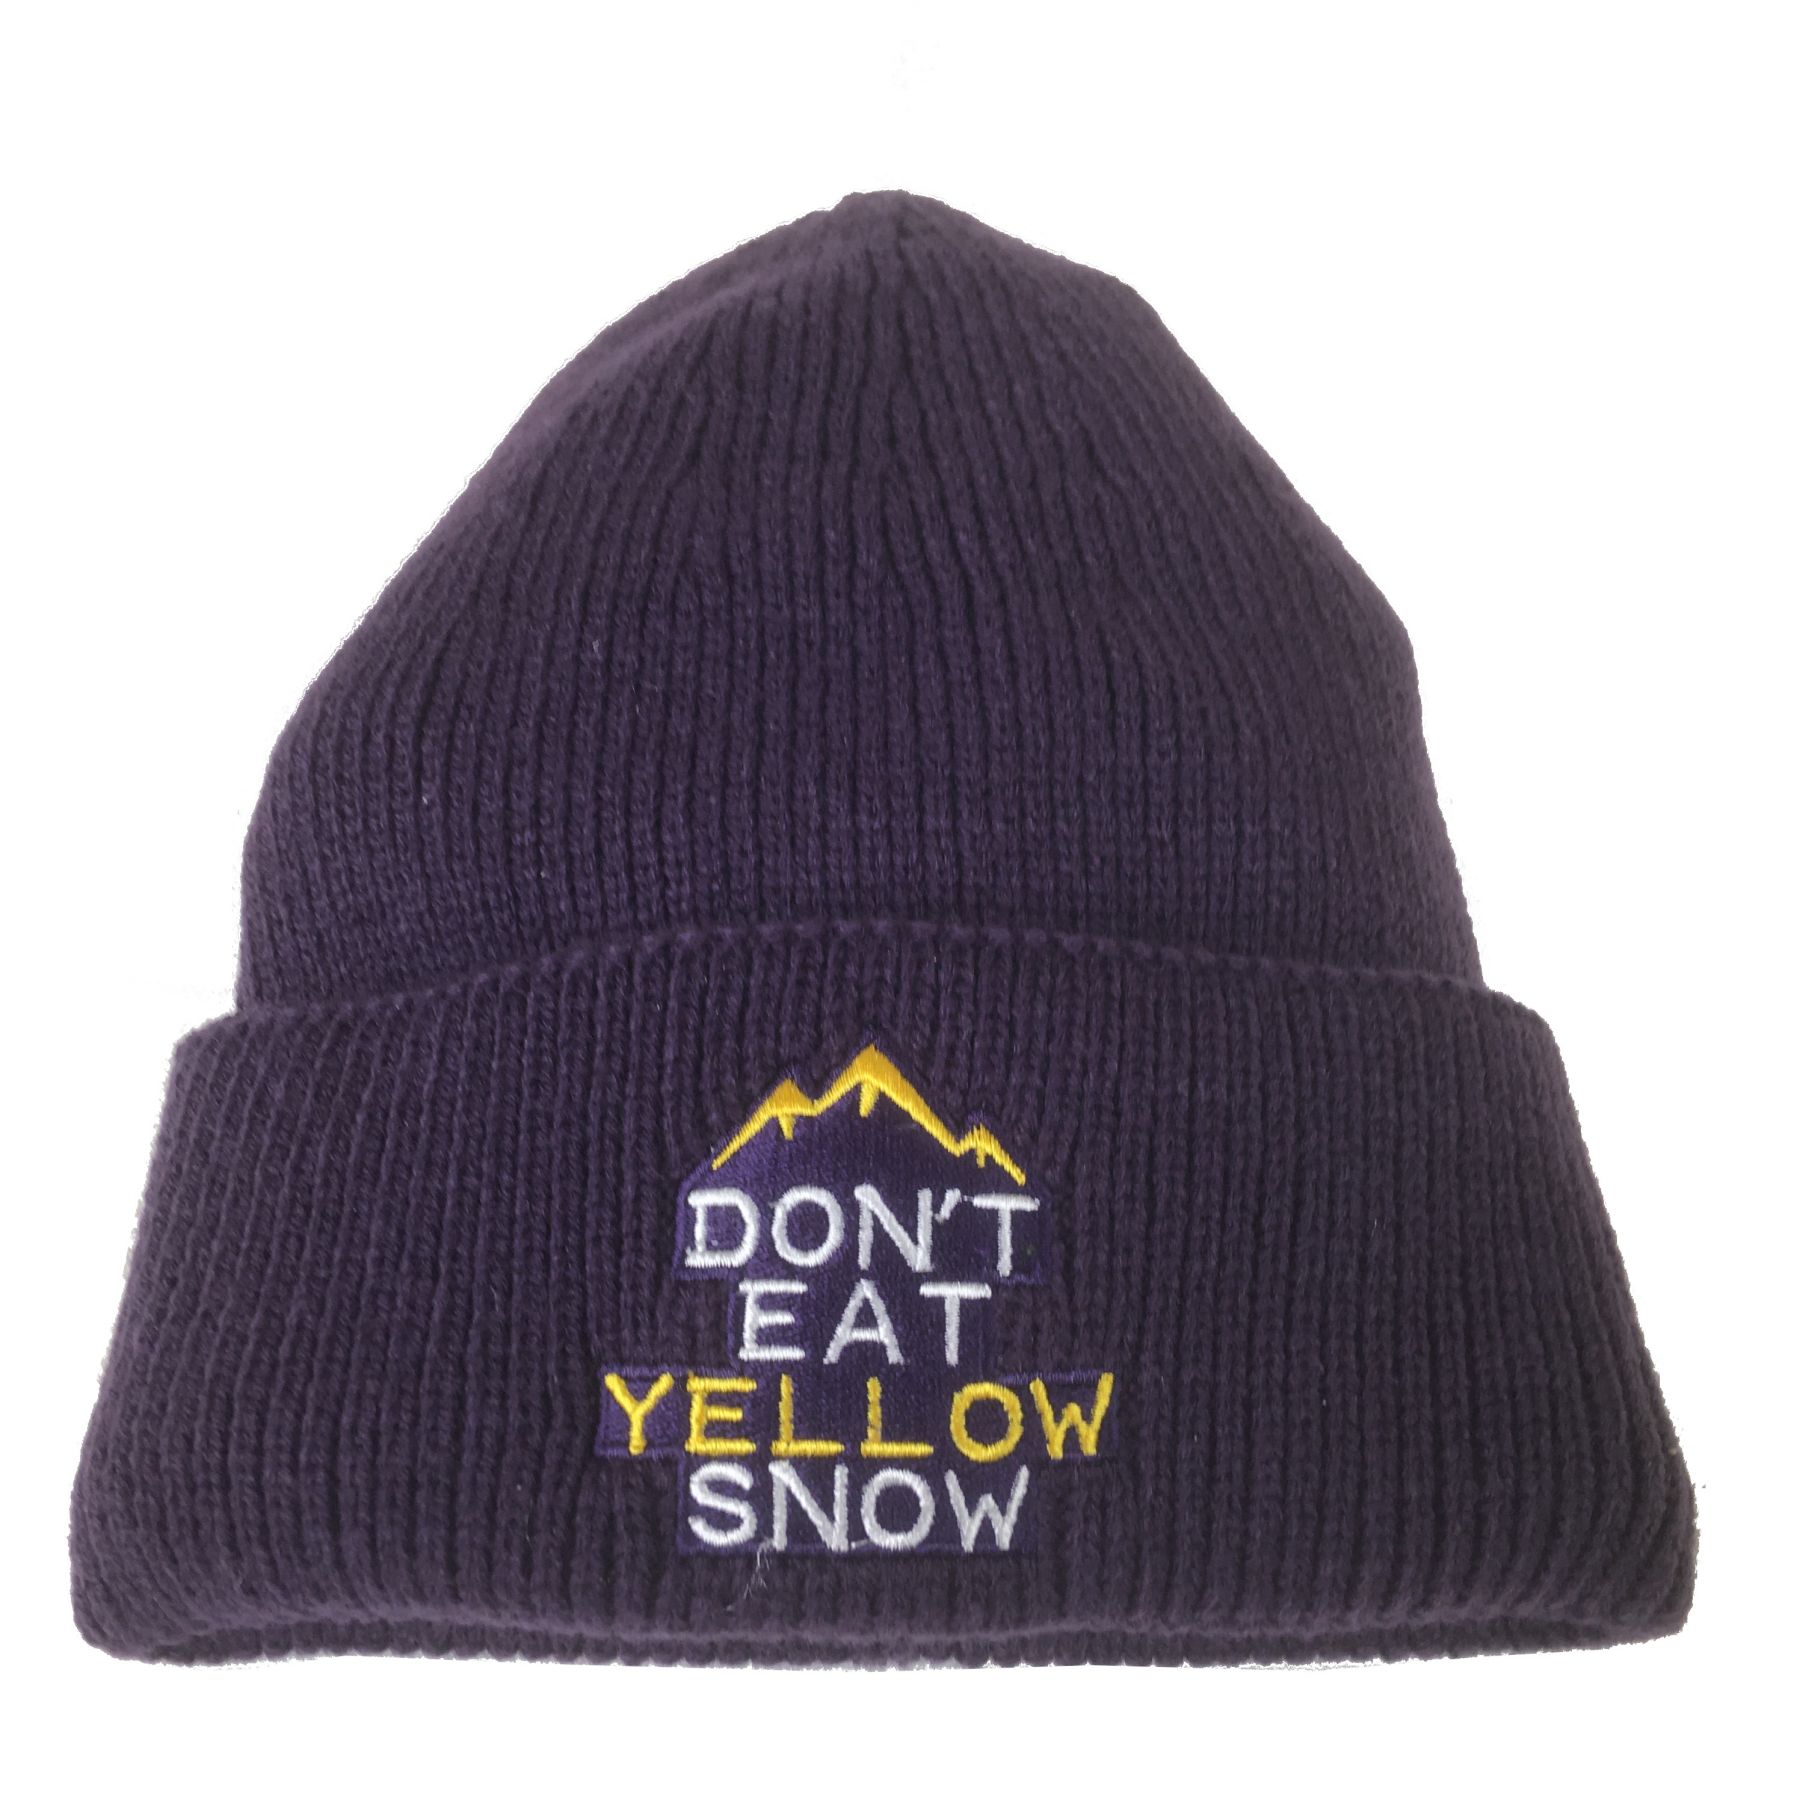 Grand Dog Do not eat yellow snow dark purple